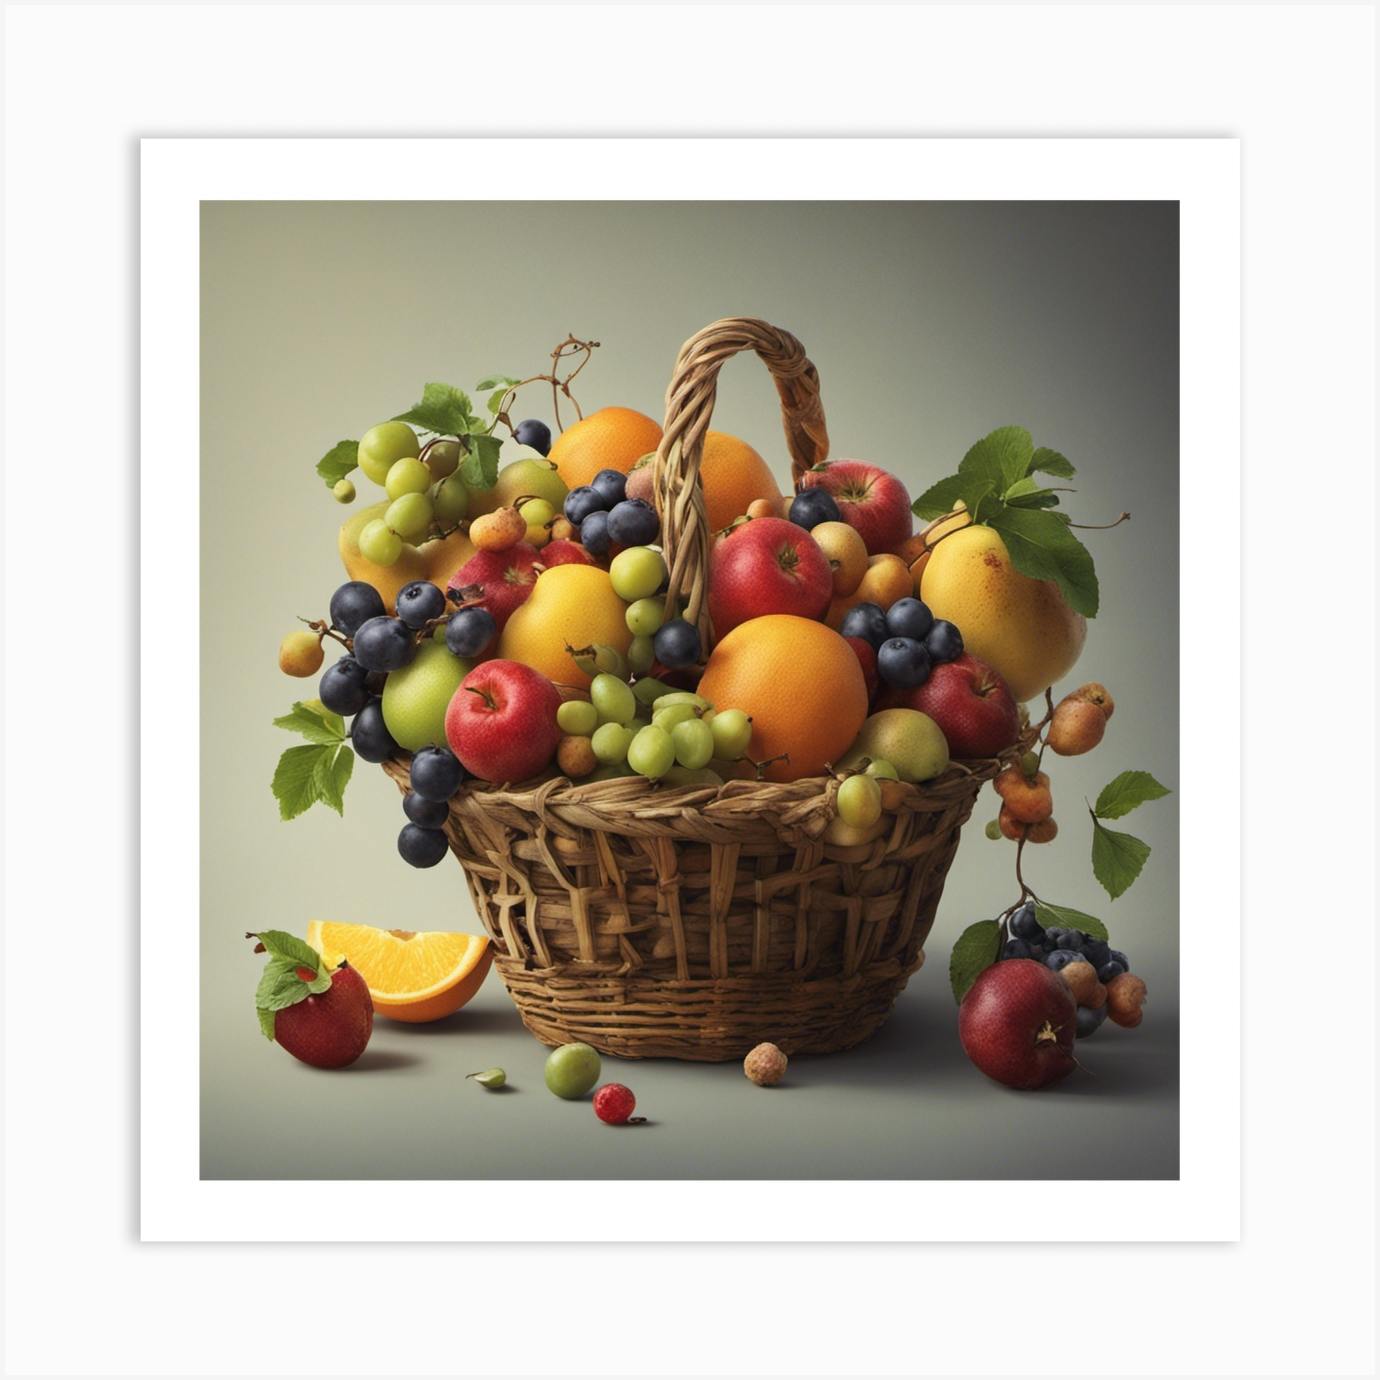 Step By Step Fruits Basket Drawing For Kids | Banana, Apple, Watermelon,  Grapes & Mango Drawing - YouTube | Fruit basket drawing, Basket drawing, Fruits  drawing